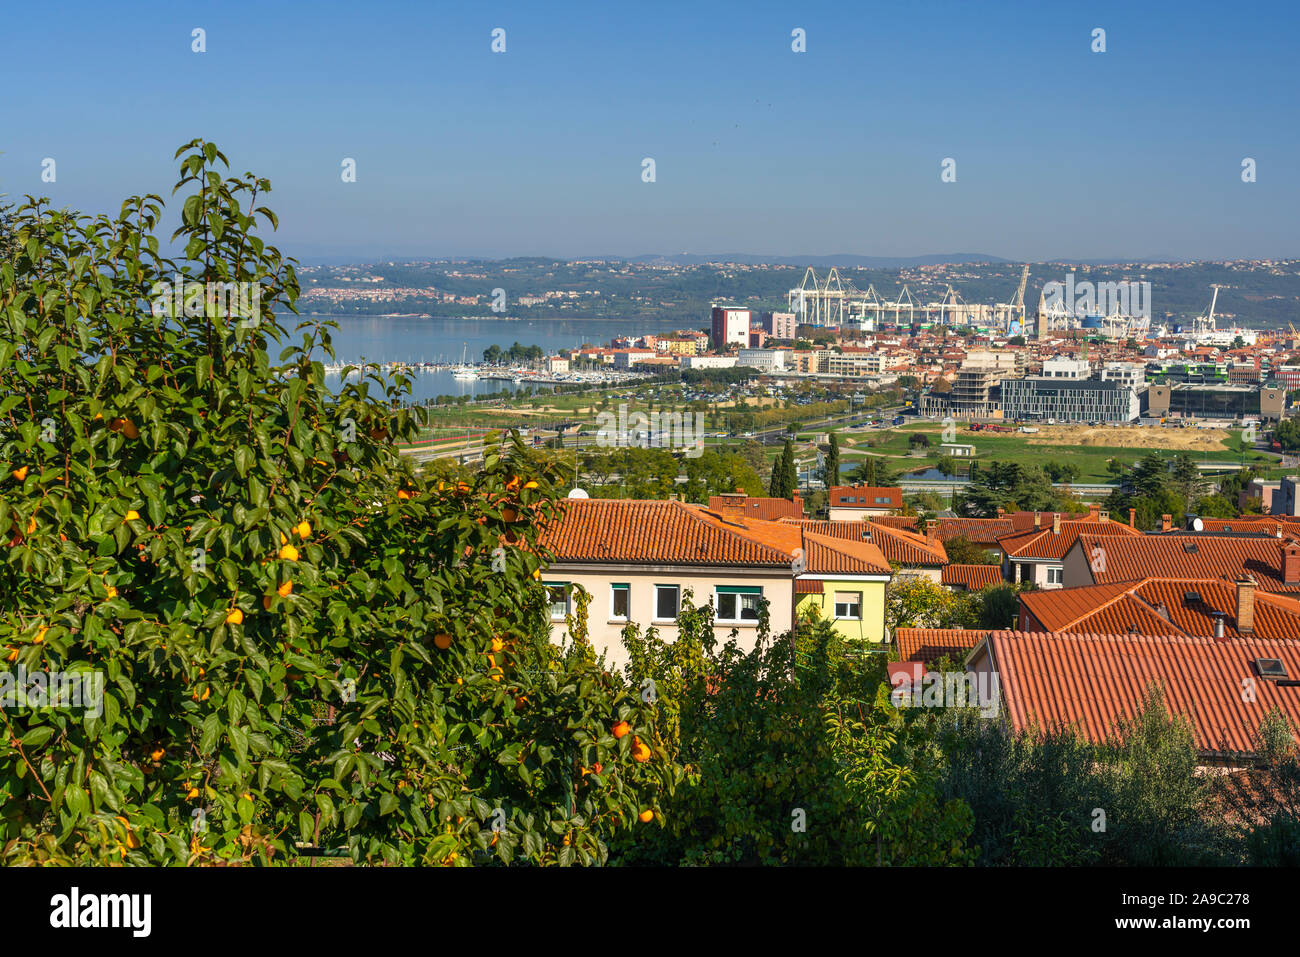 The skyline of the Adriatic port city of Koper, Slovenia, Europe. Stock Photo